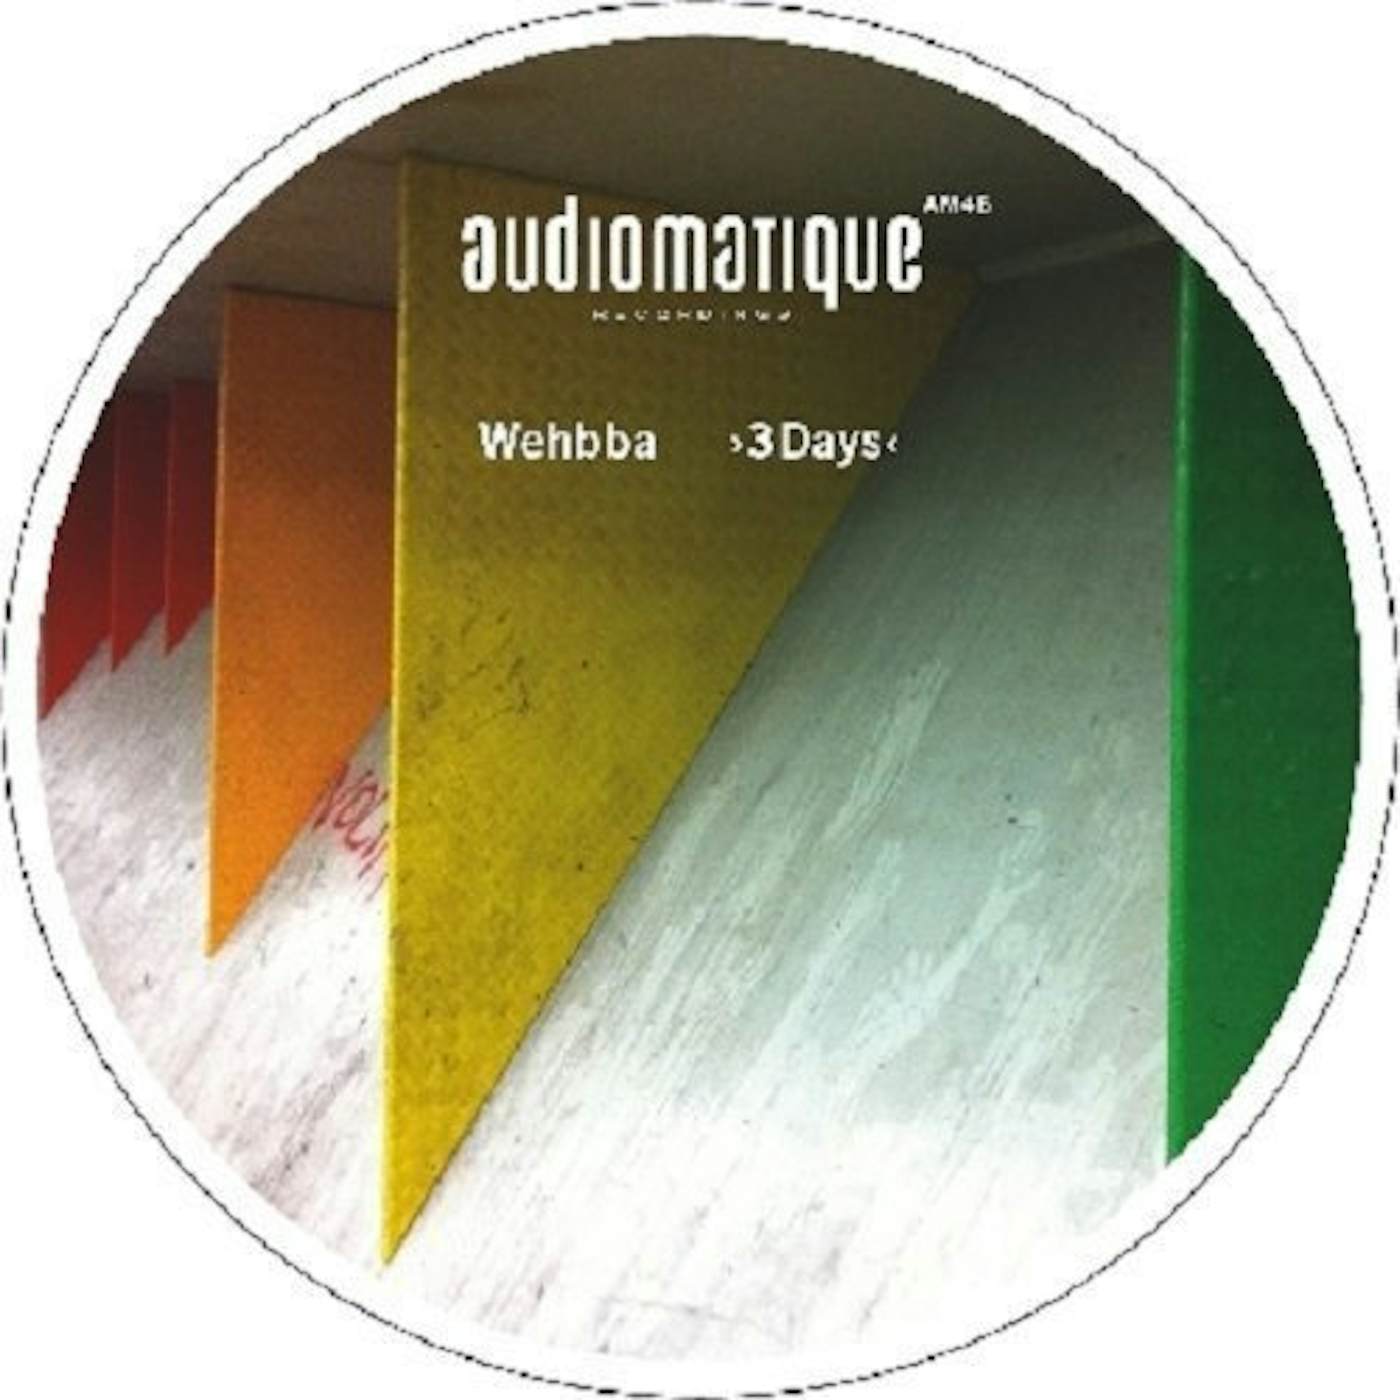 Wehbba 3 Days Vinyl Record